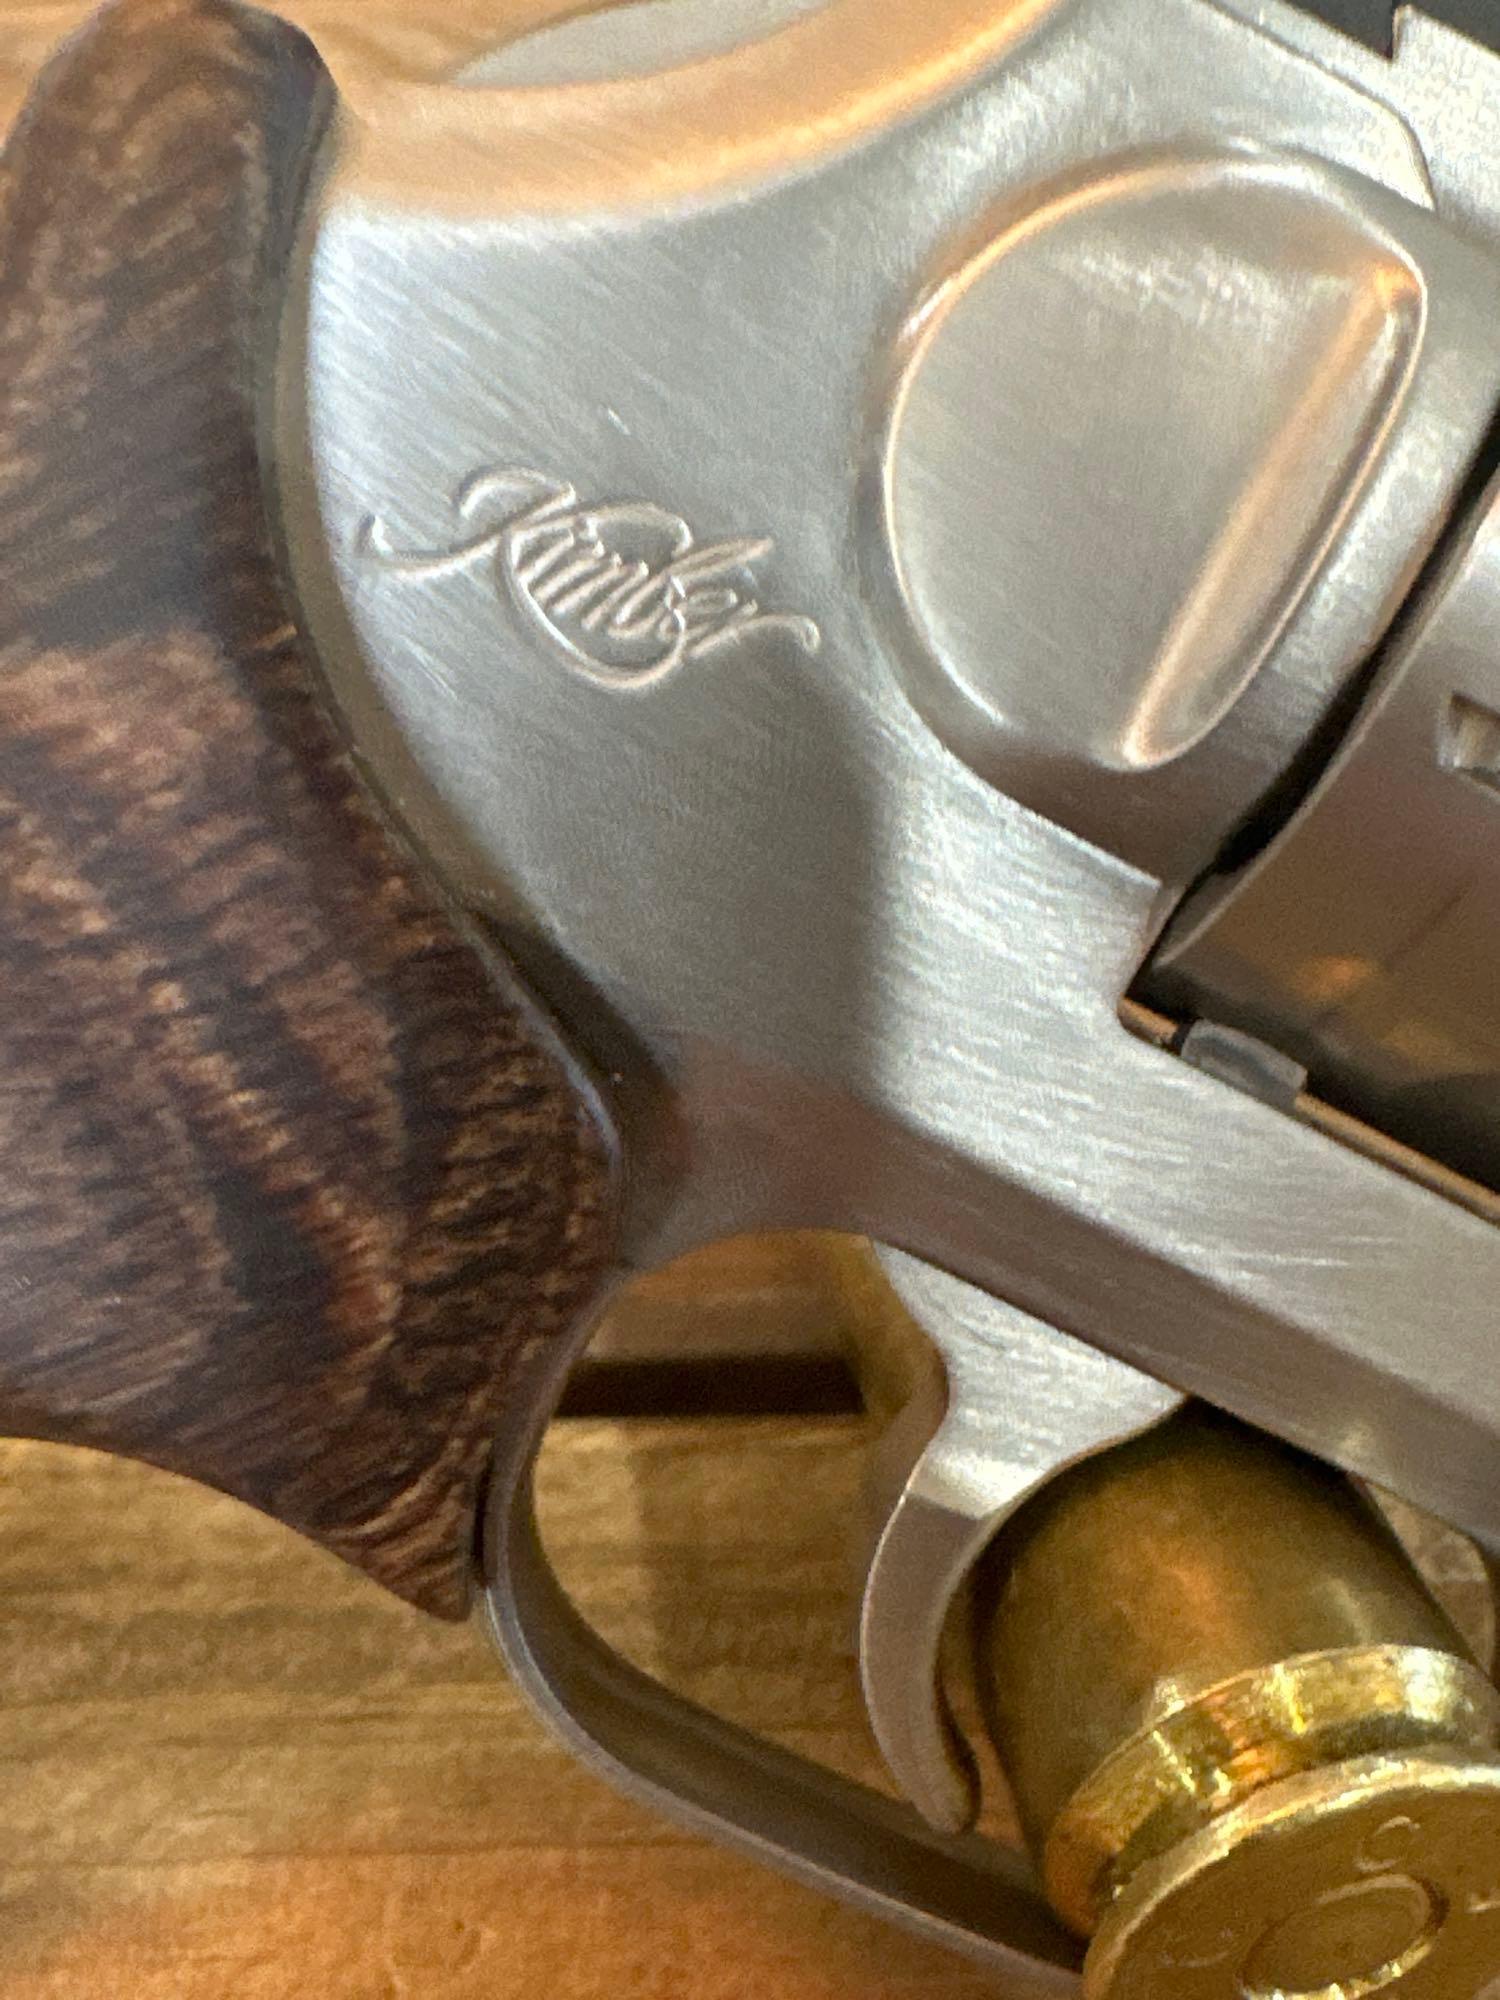 Kimber 6S Target SN# RV050807 .357 mag Revolver...